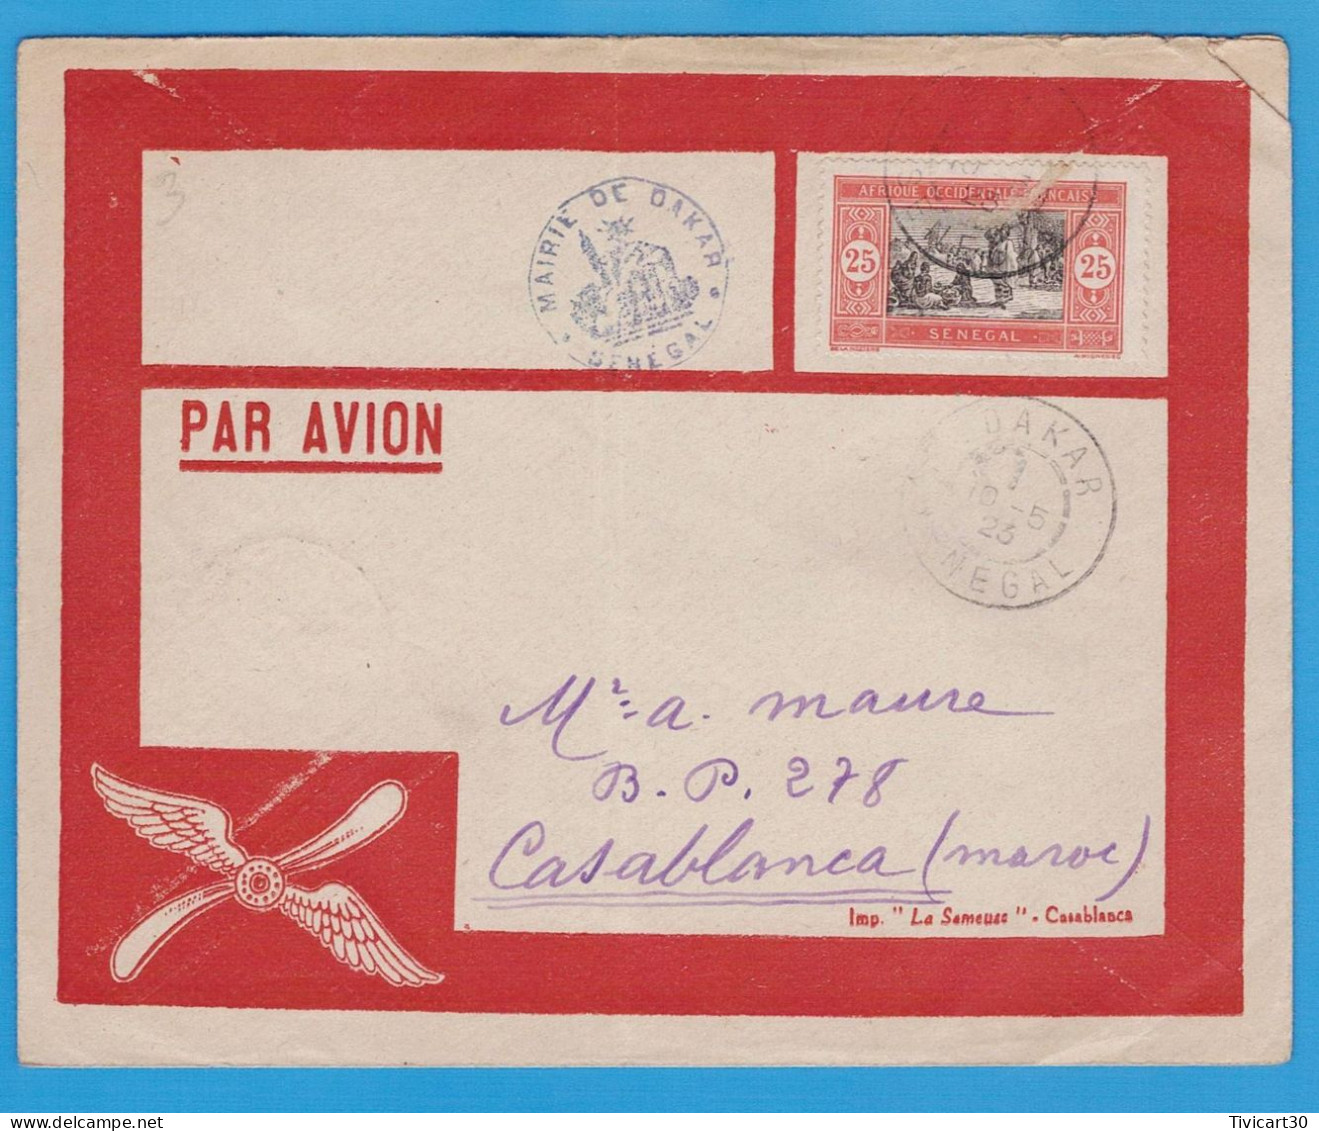 LETTRE PAR AVION LATECOERE - DAKAR (10 MAI 1923) POUR CASABLANCA (22 MAI 1923) - MISSION ROIG - CACHET "MAIRIE DE DAKAR" - Covers & Documents